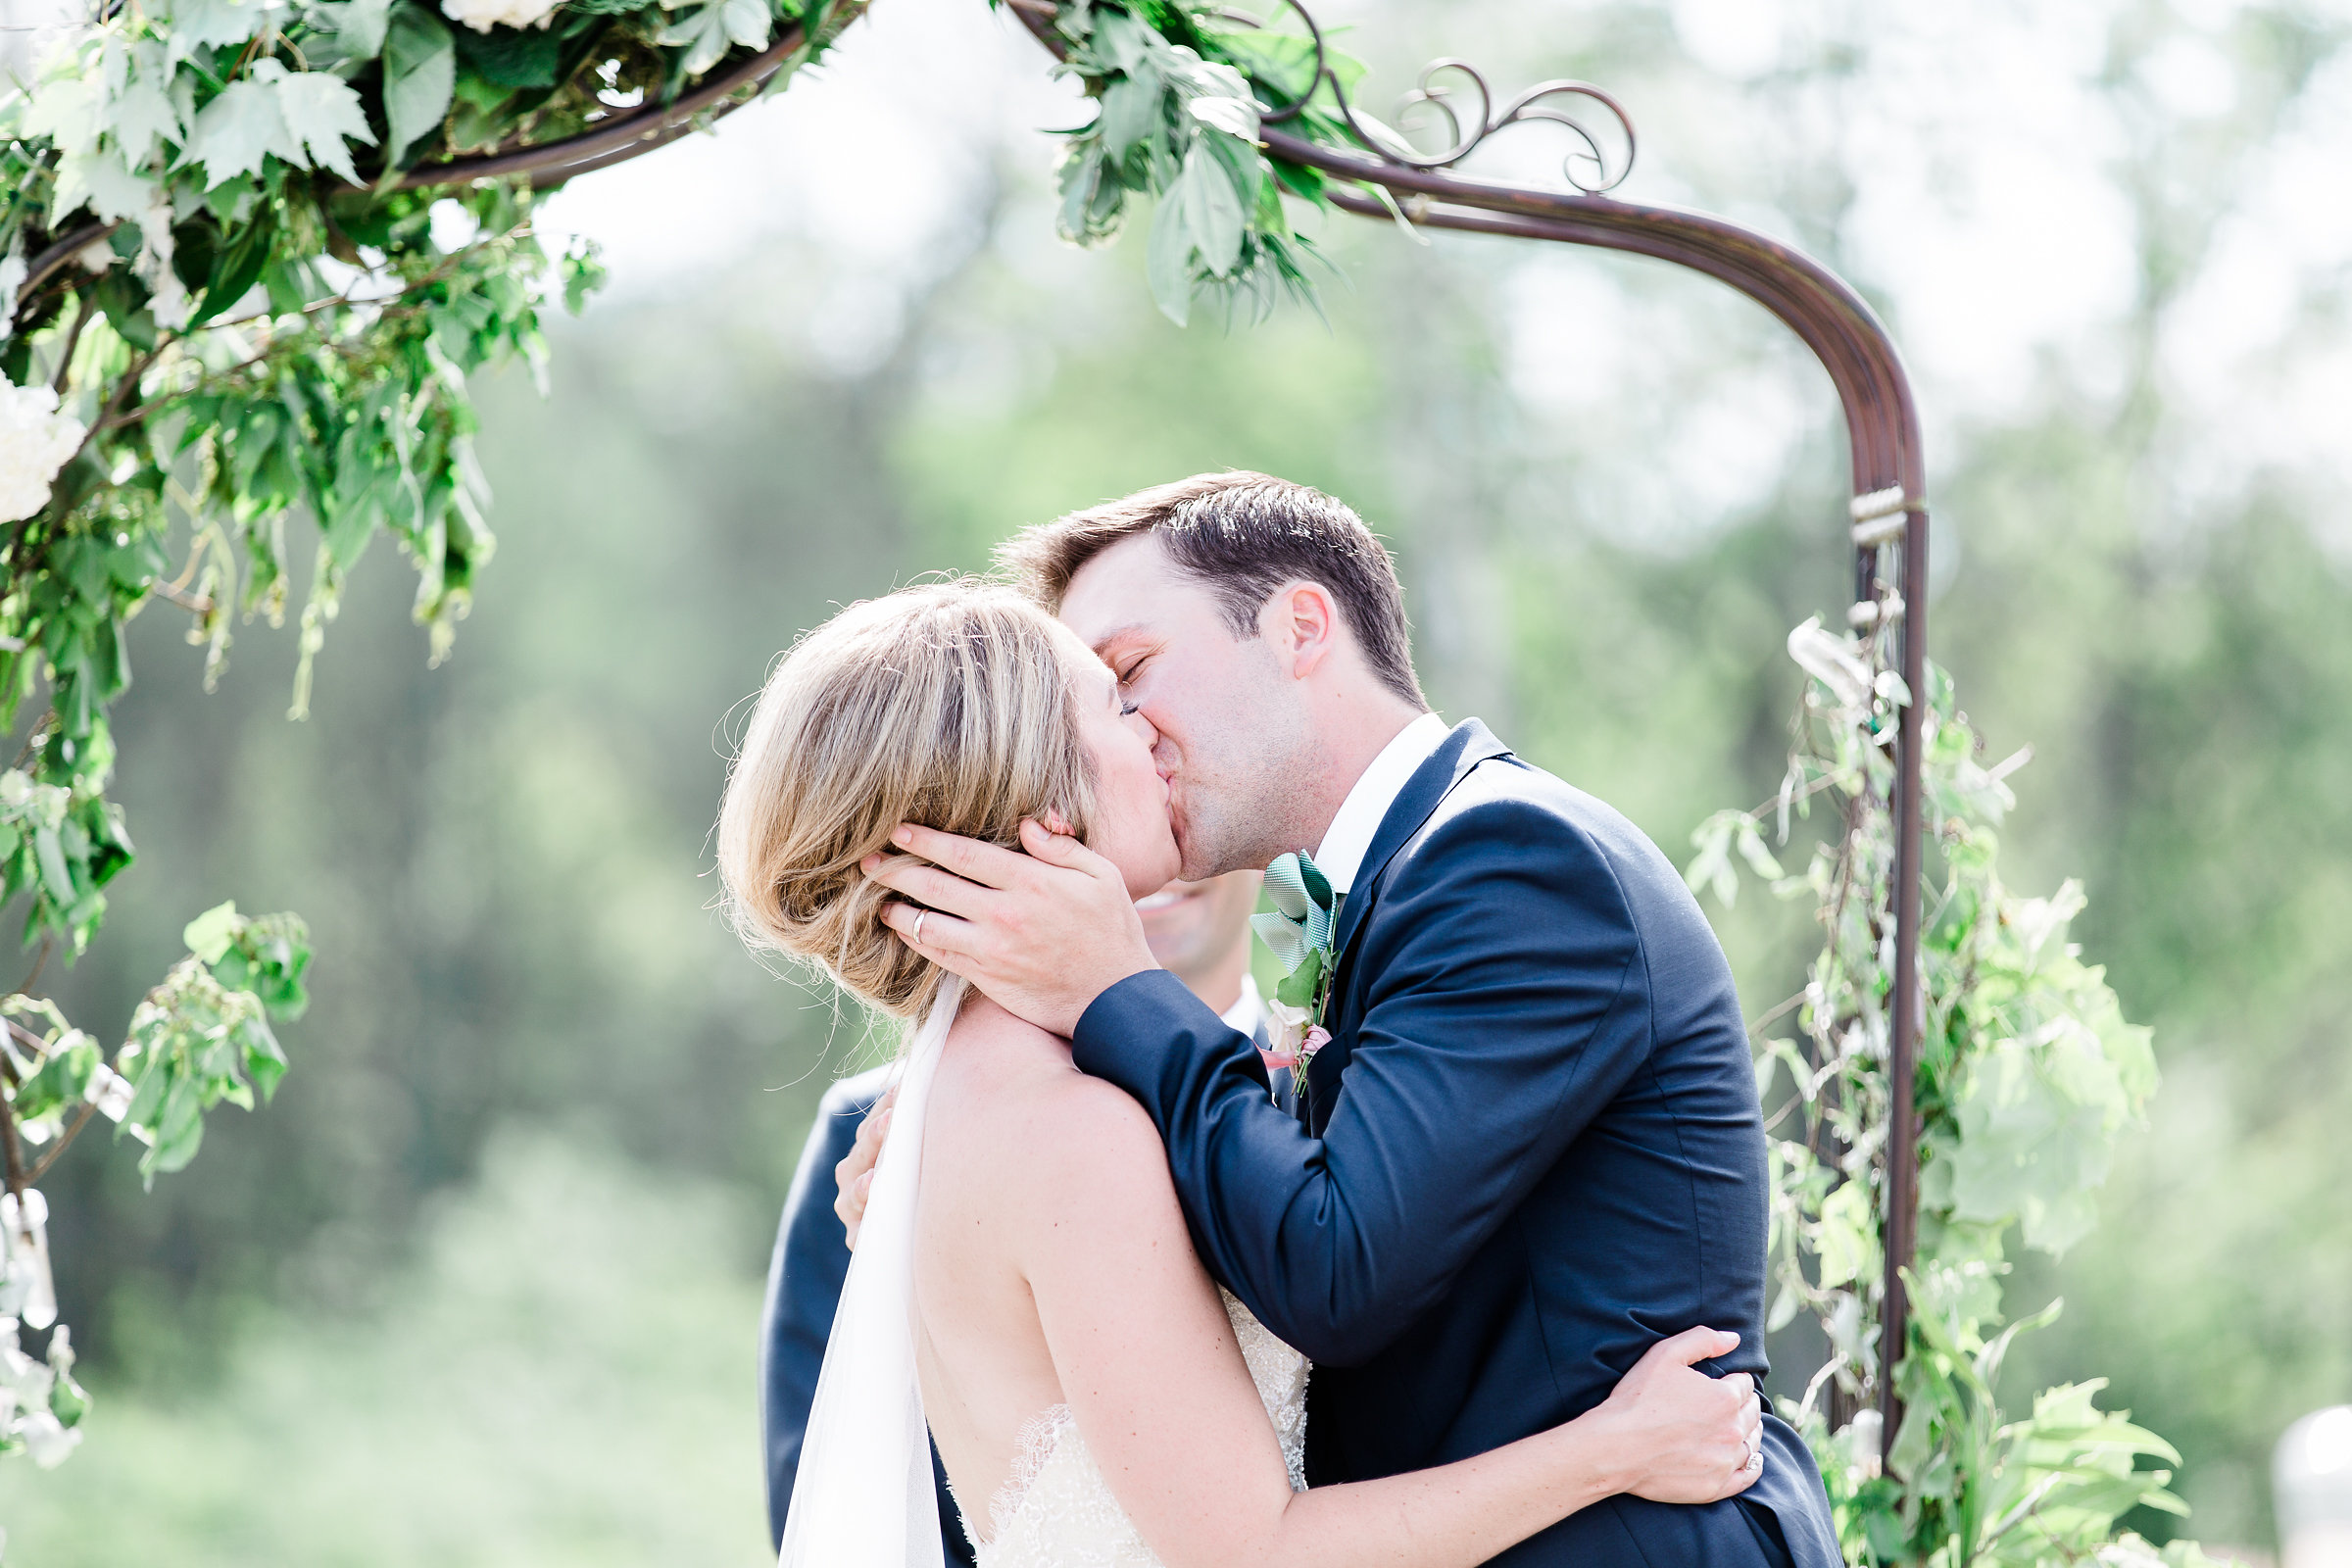 Vineyard Wedding Ceremony | The Day's Design | Ashley Slater Photography